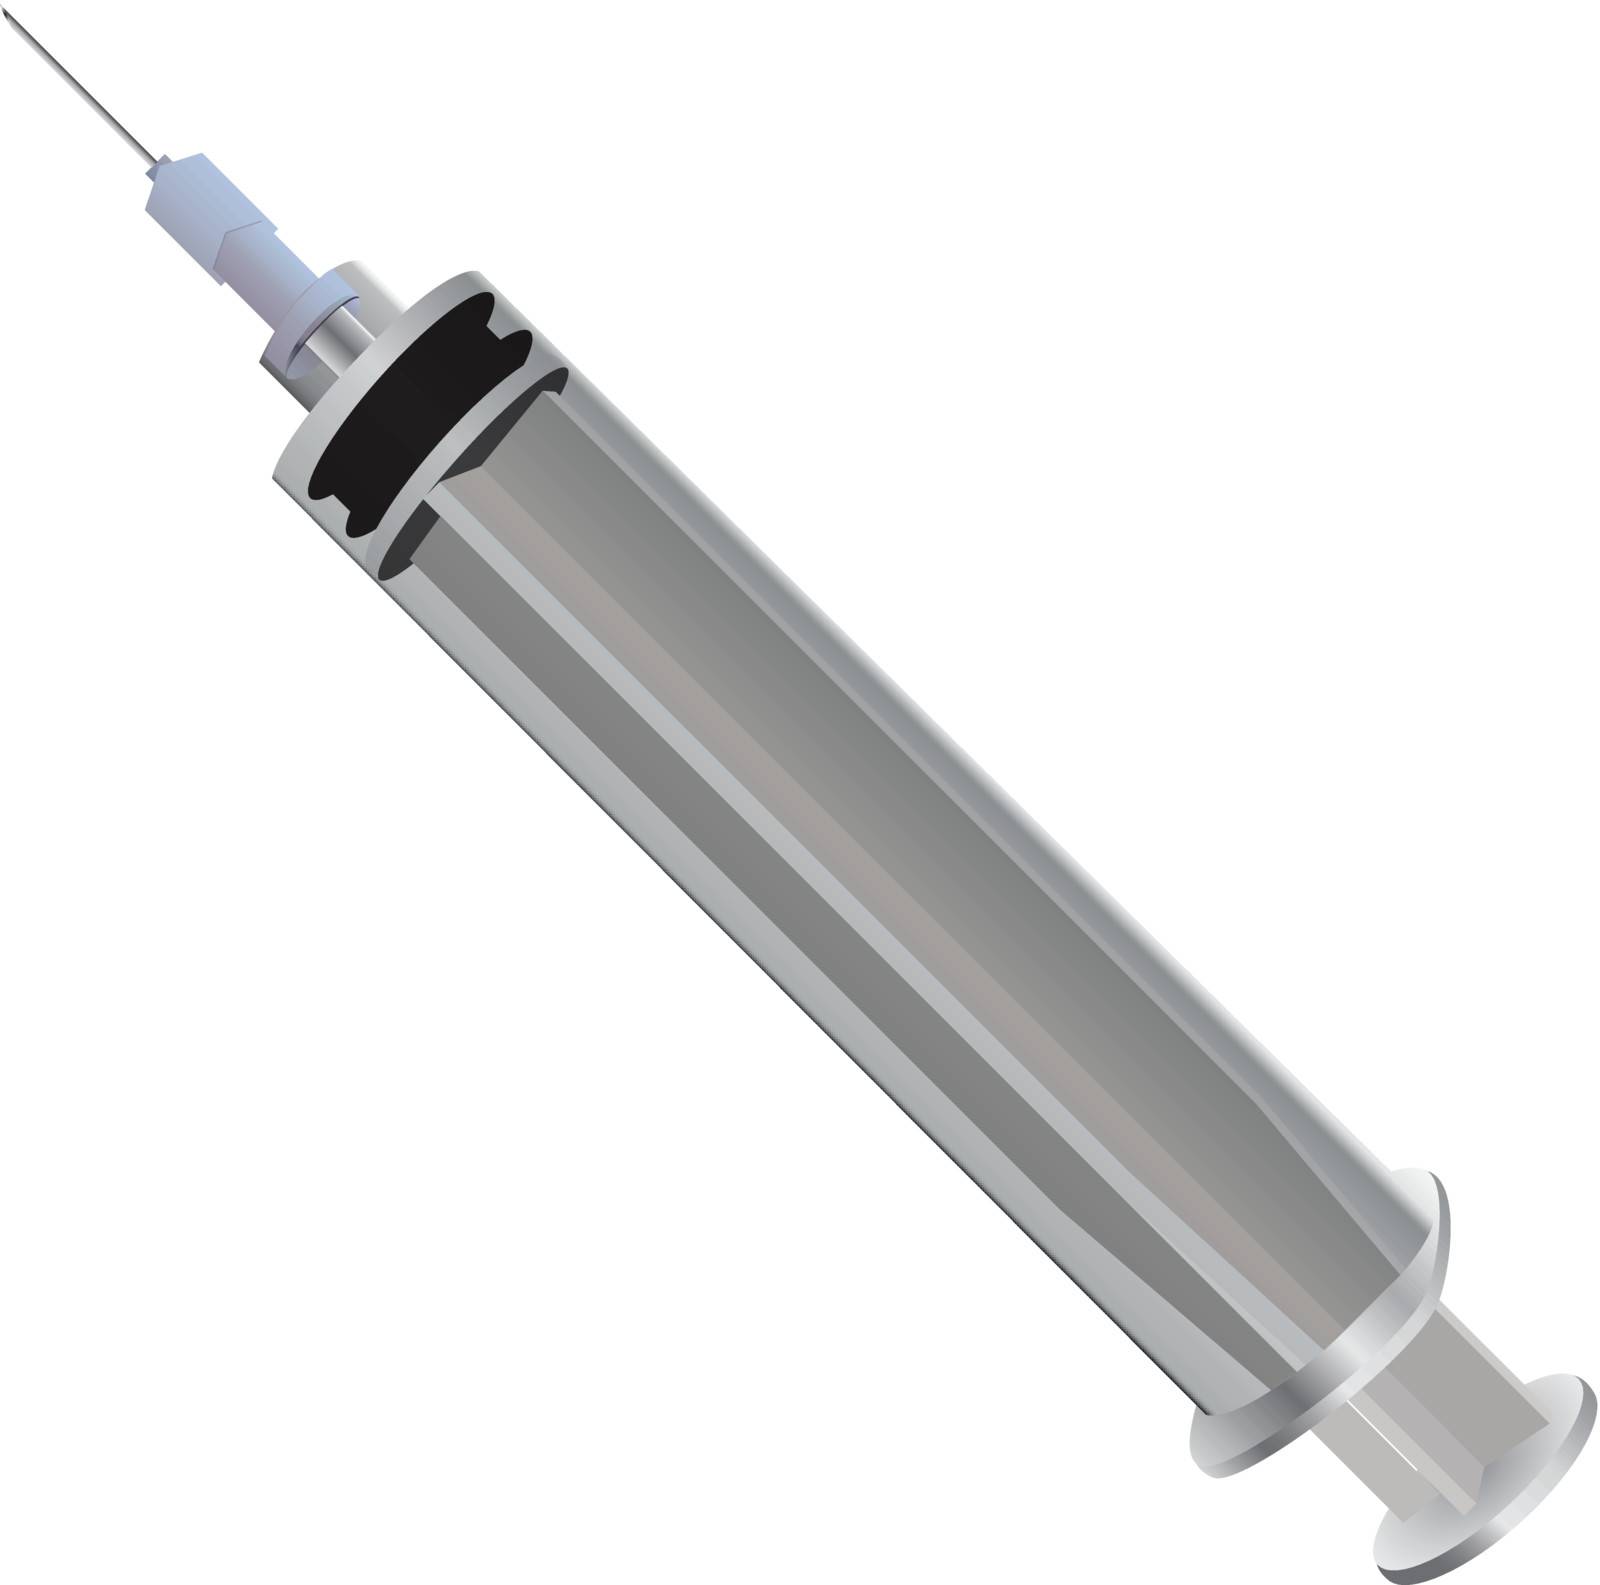 Medical syringe by VIPDesignUSA